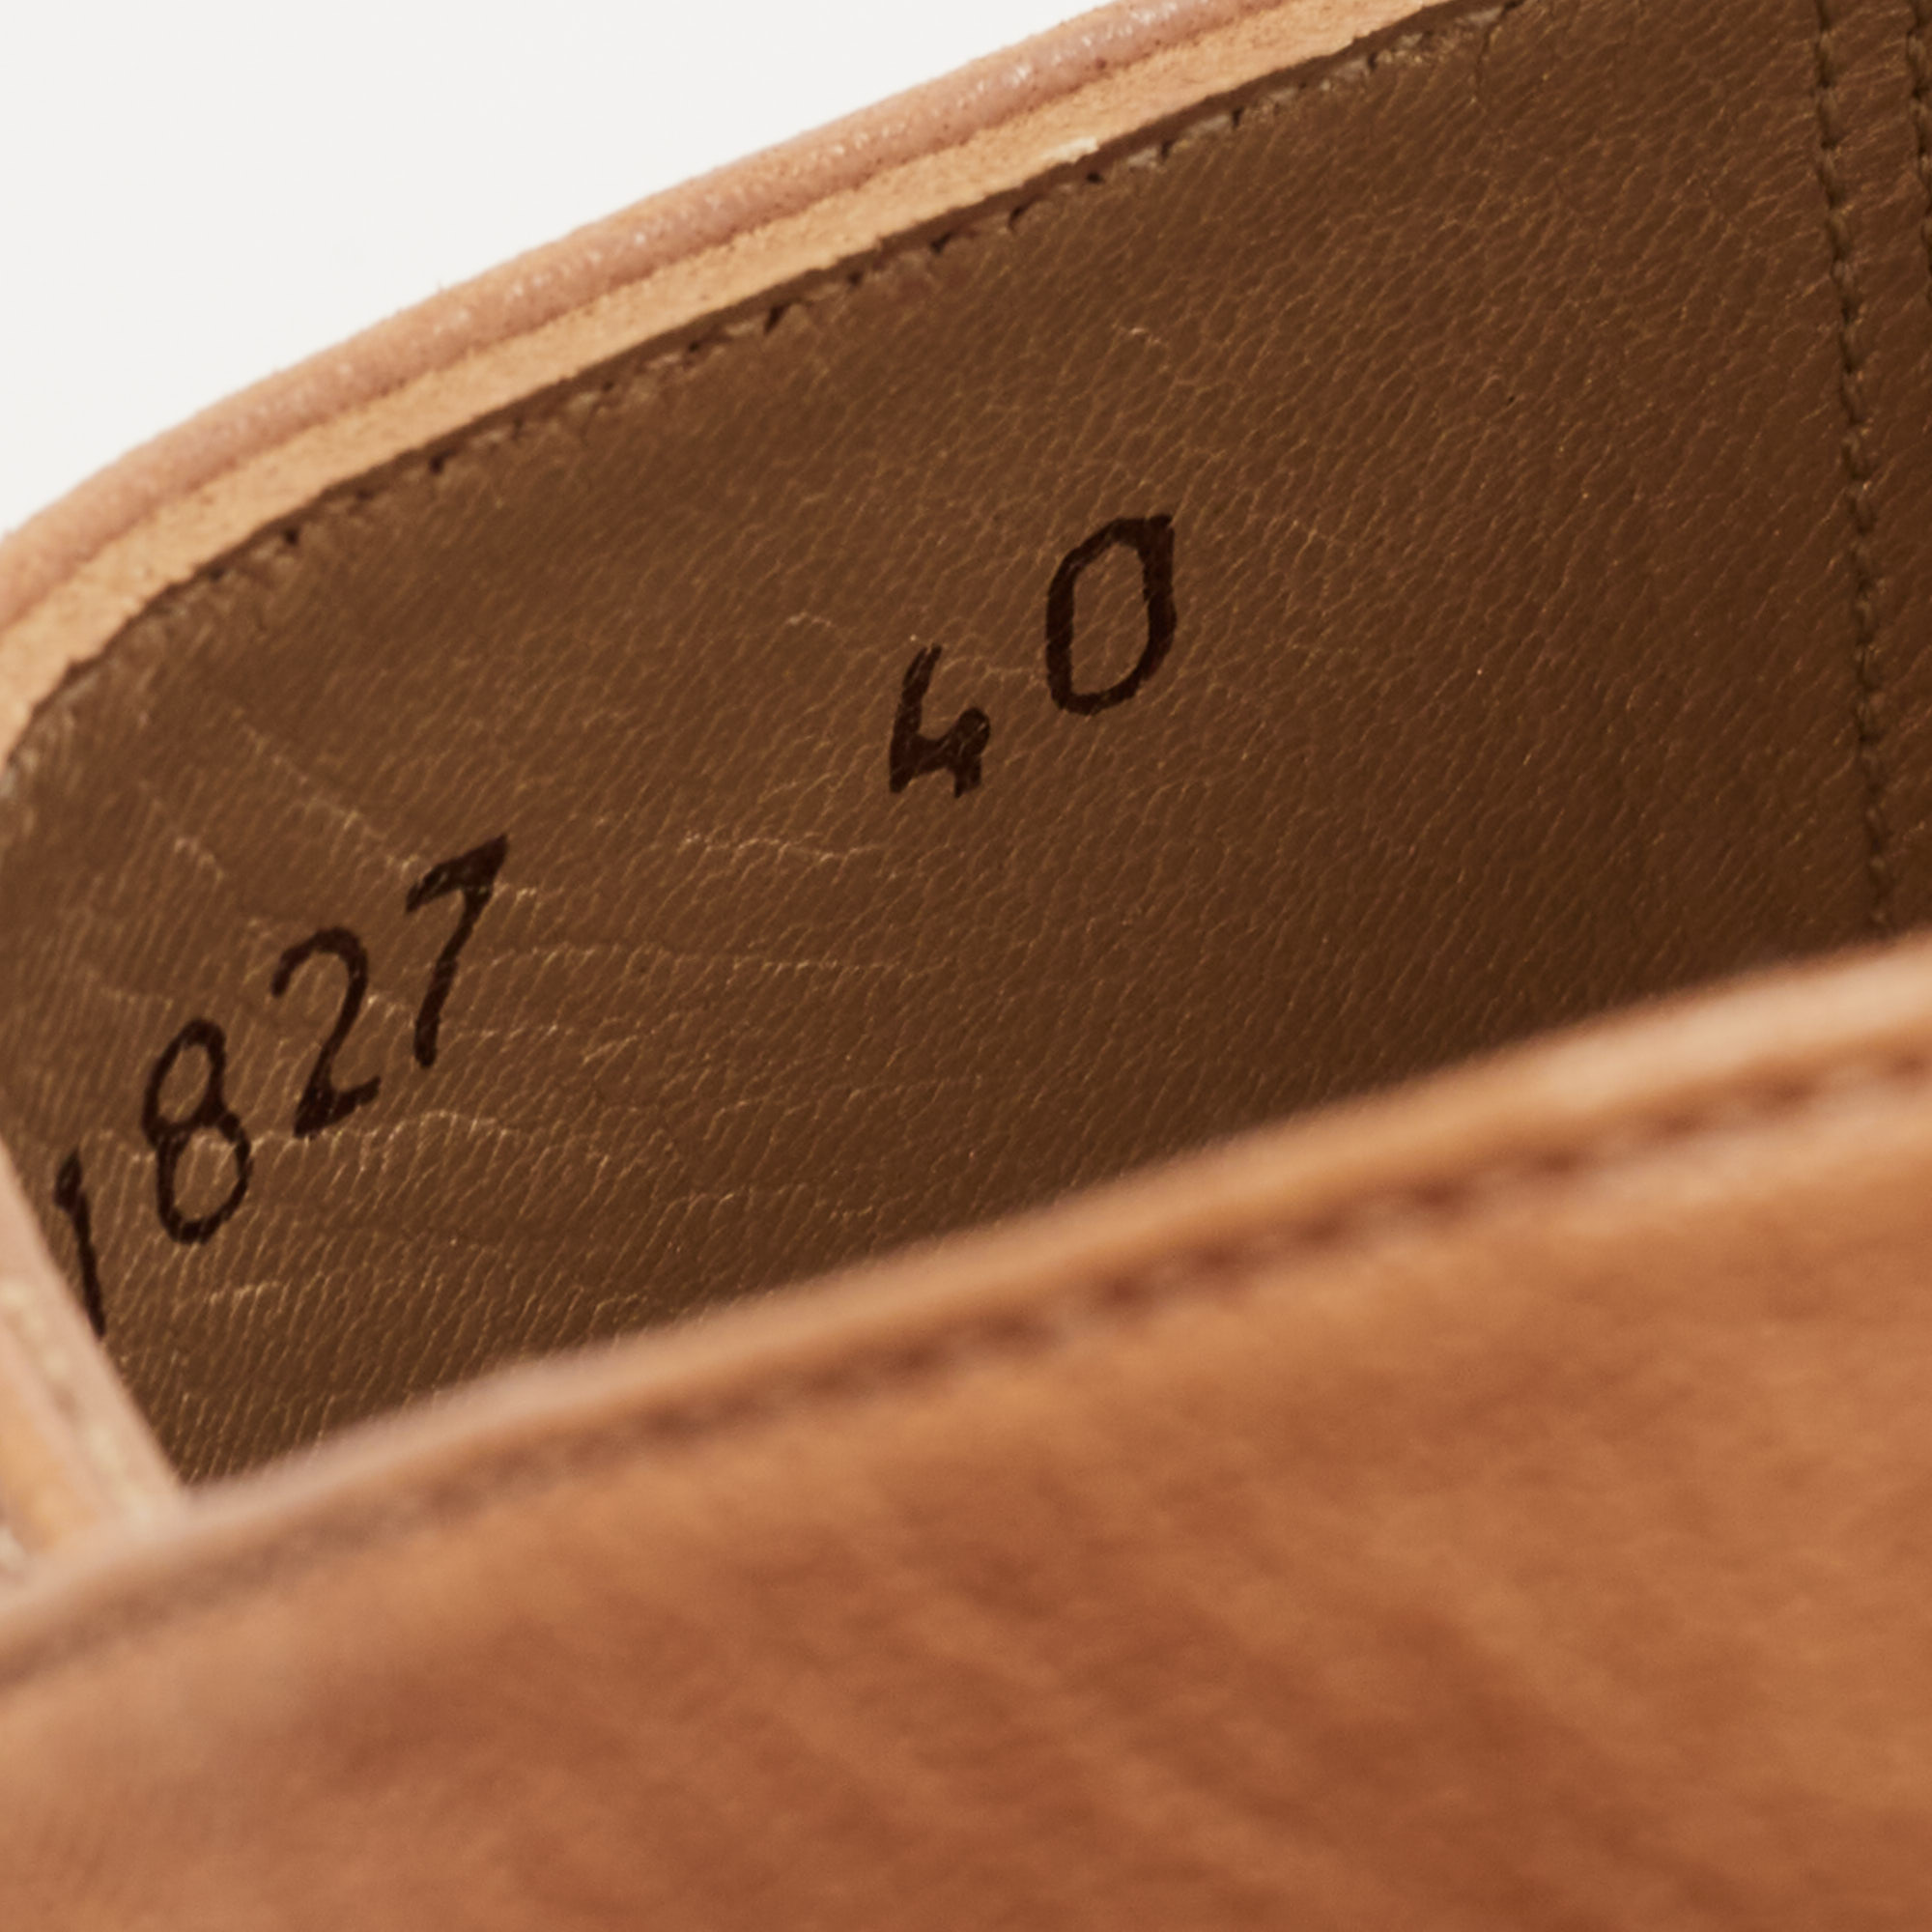 Stuart Weitzman Brown Leather Studded Slingback Block Heel Sandals Size 40